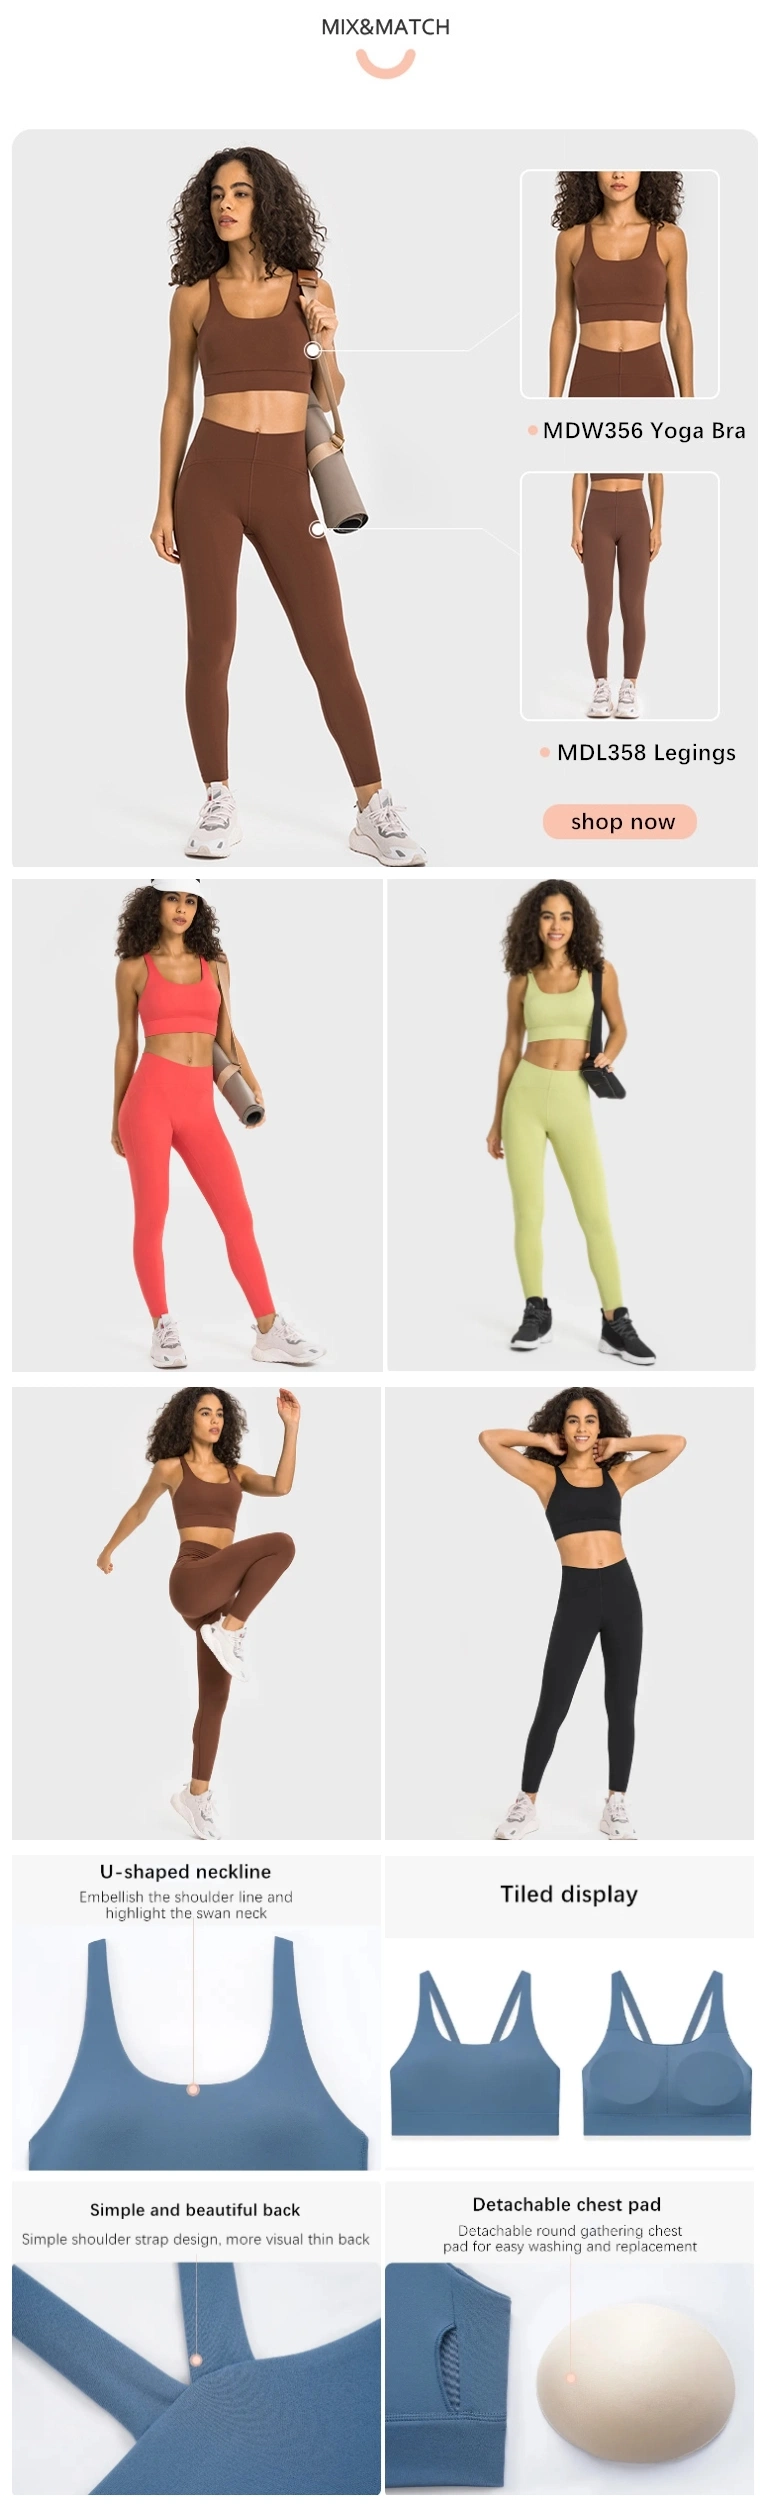 Xsunwing Wholesale Sweat Suits New Gym Workout Vest Yoga Fitness Underwear Running Yoga Sports Bra Gym Wear